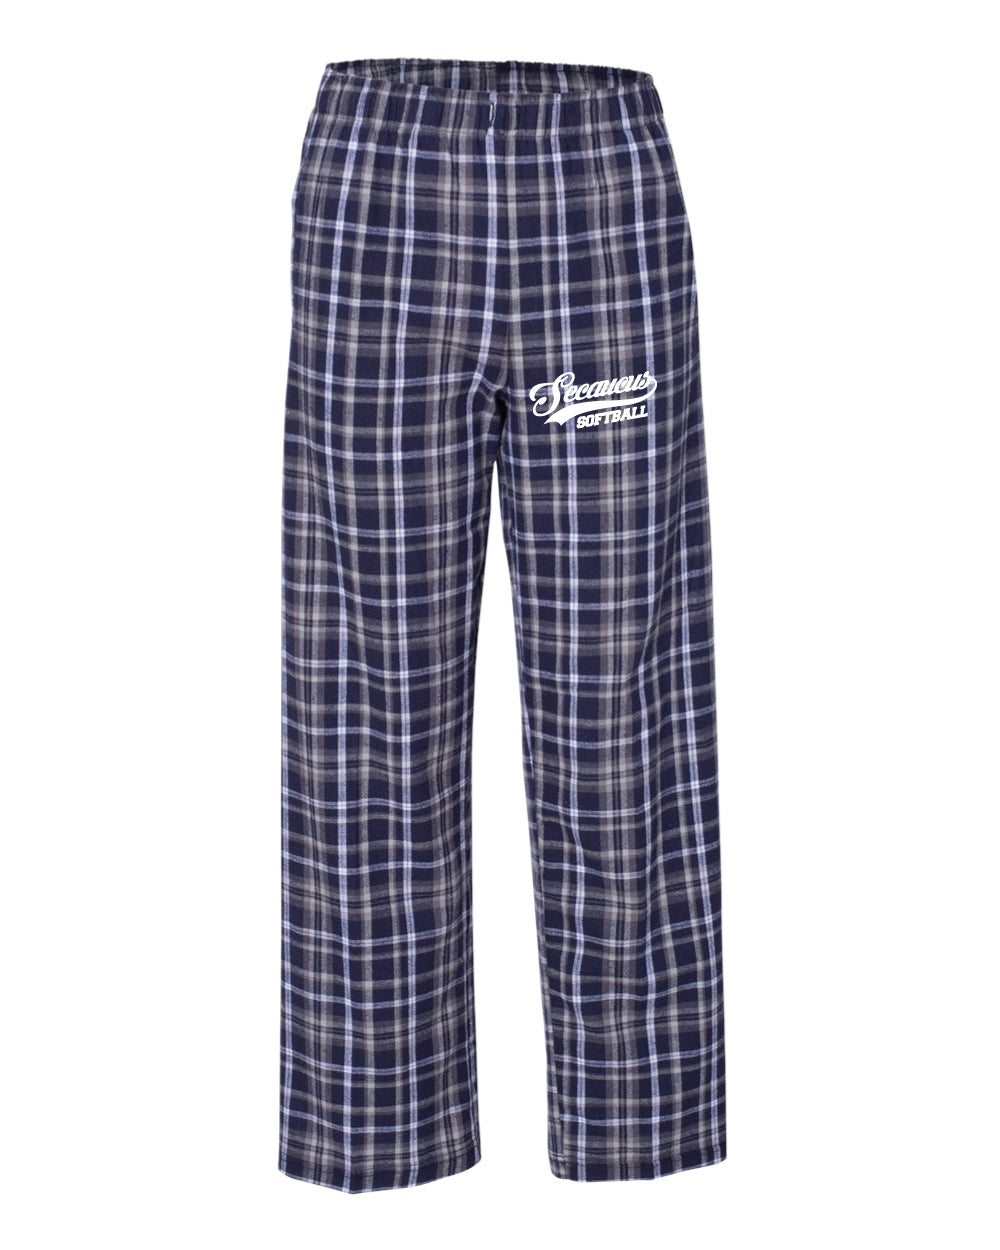 Secaucus Softball Flannel Pajama Pants - Navy Plaid - 5KounT2018